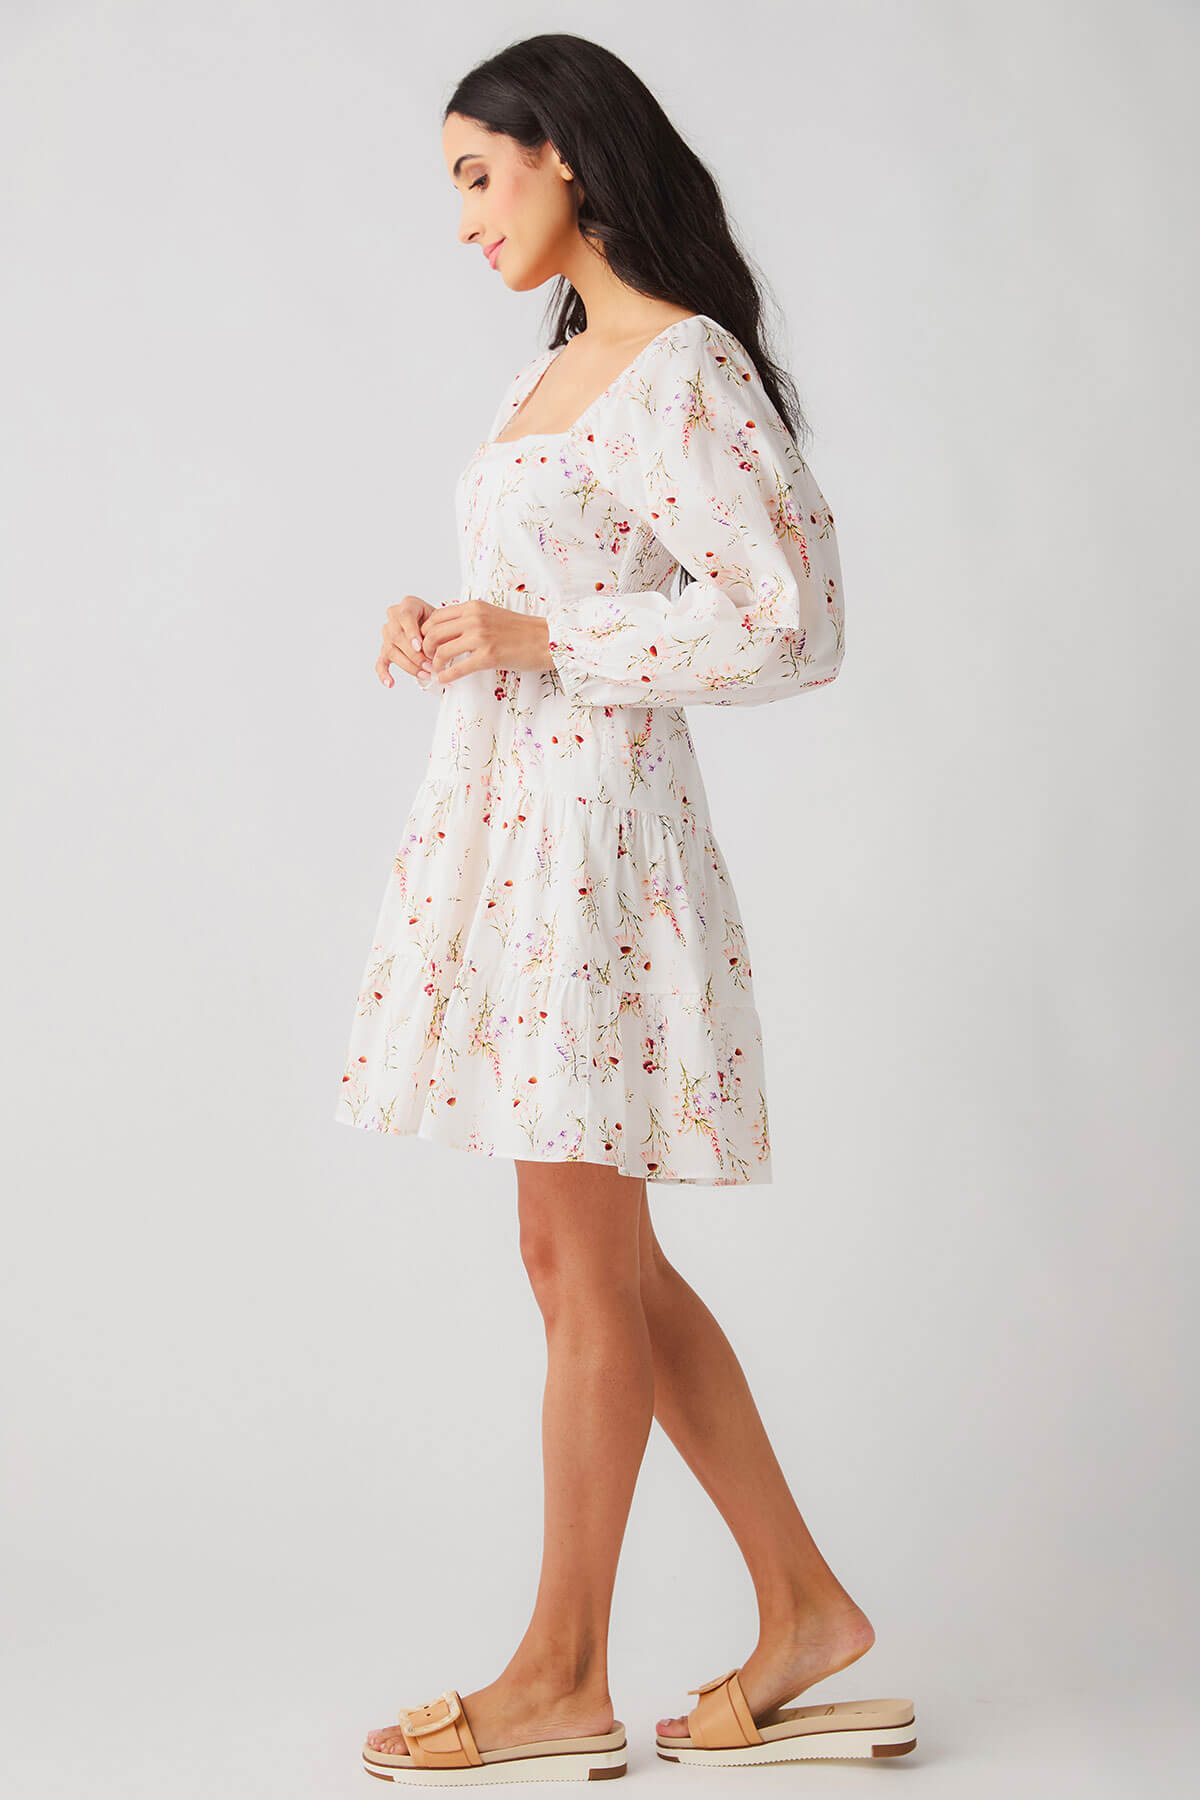 Lucy White Long Sleeve Mini Dress